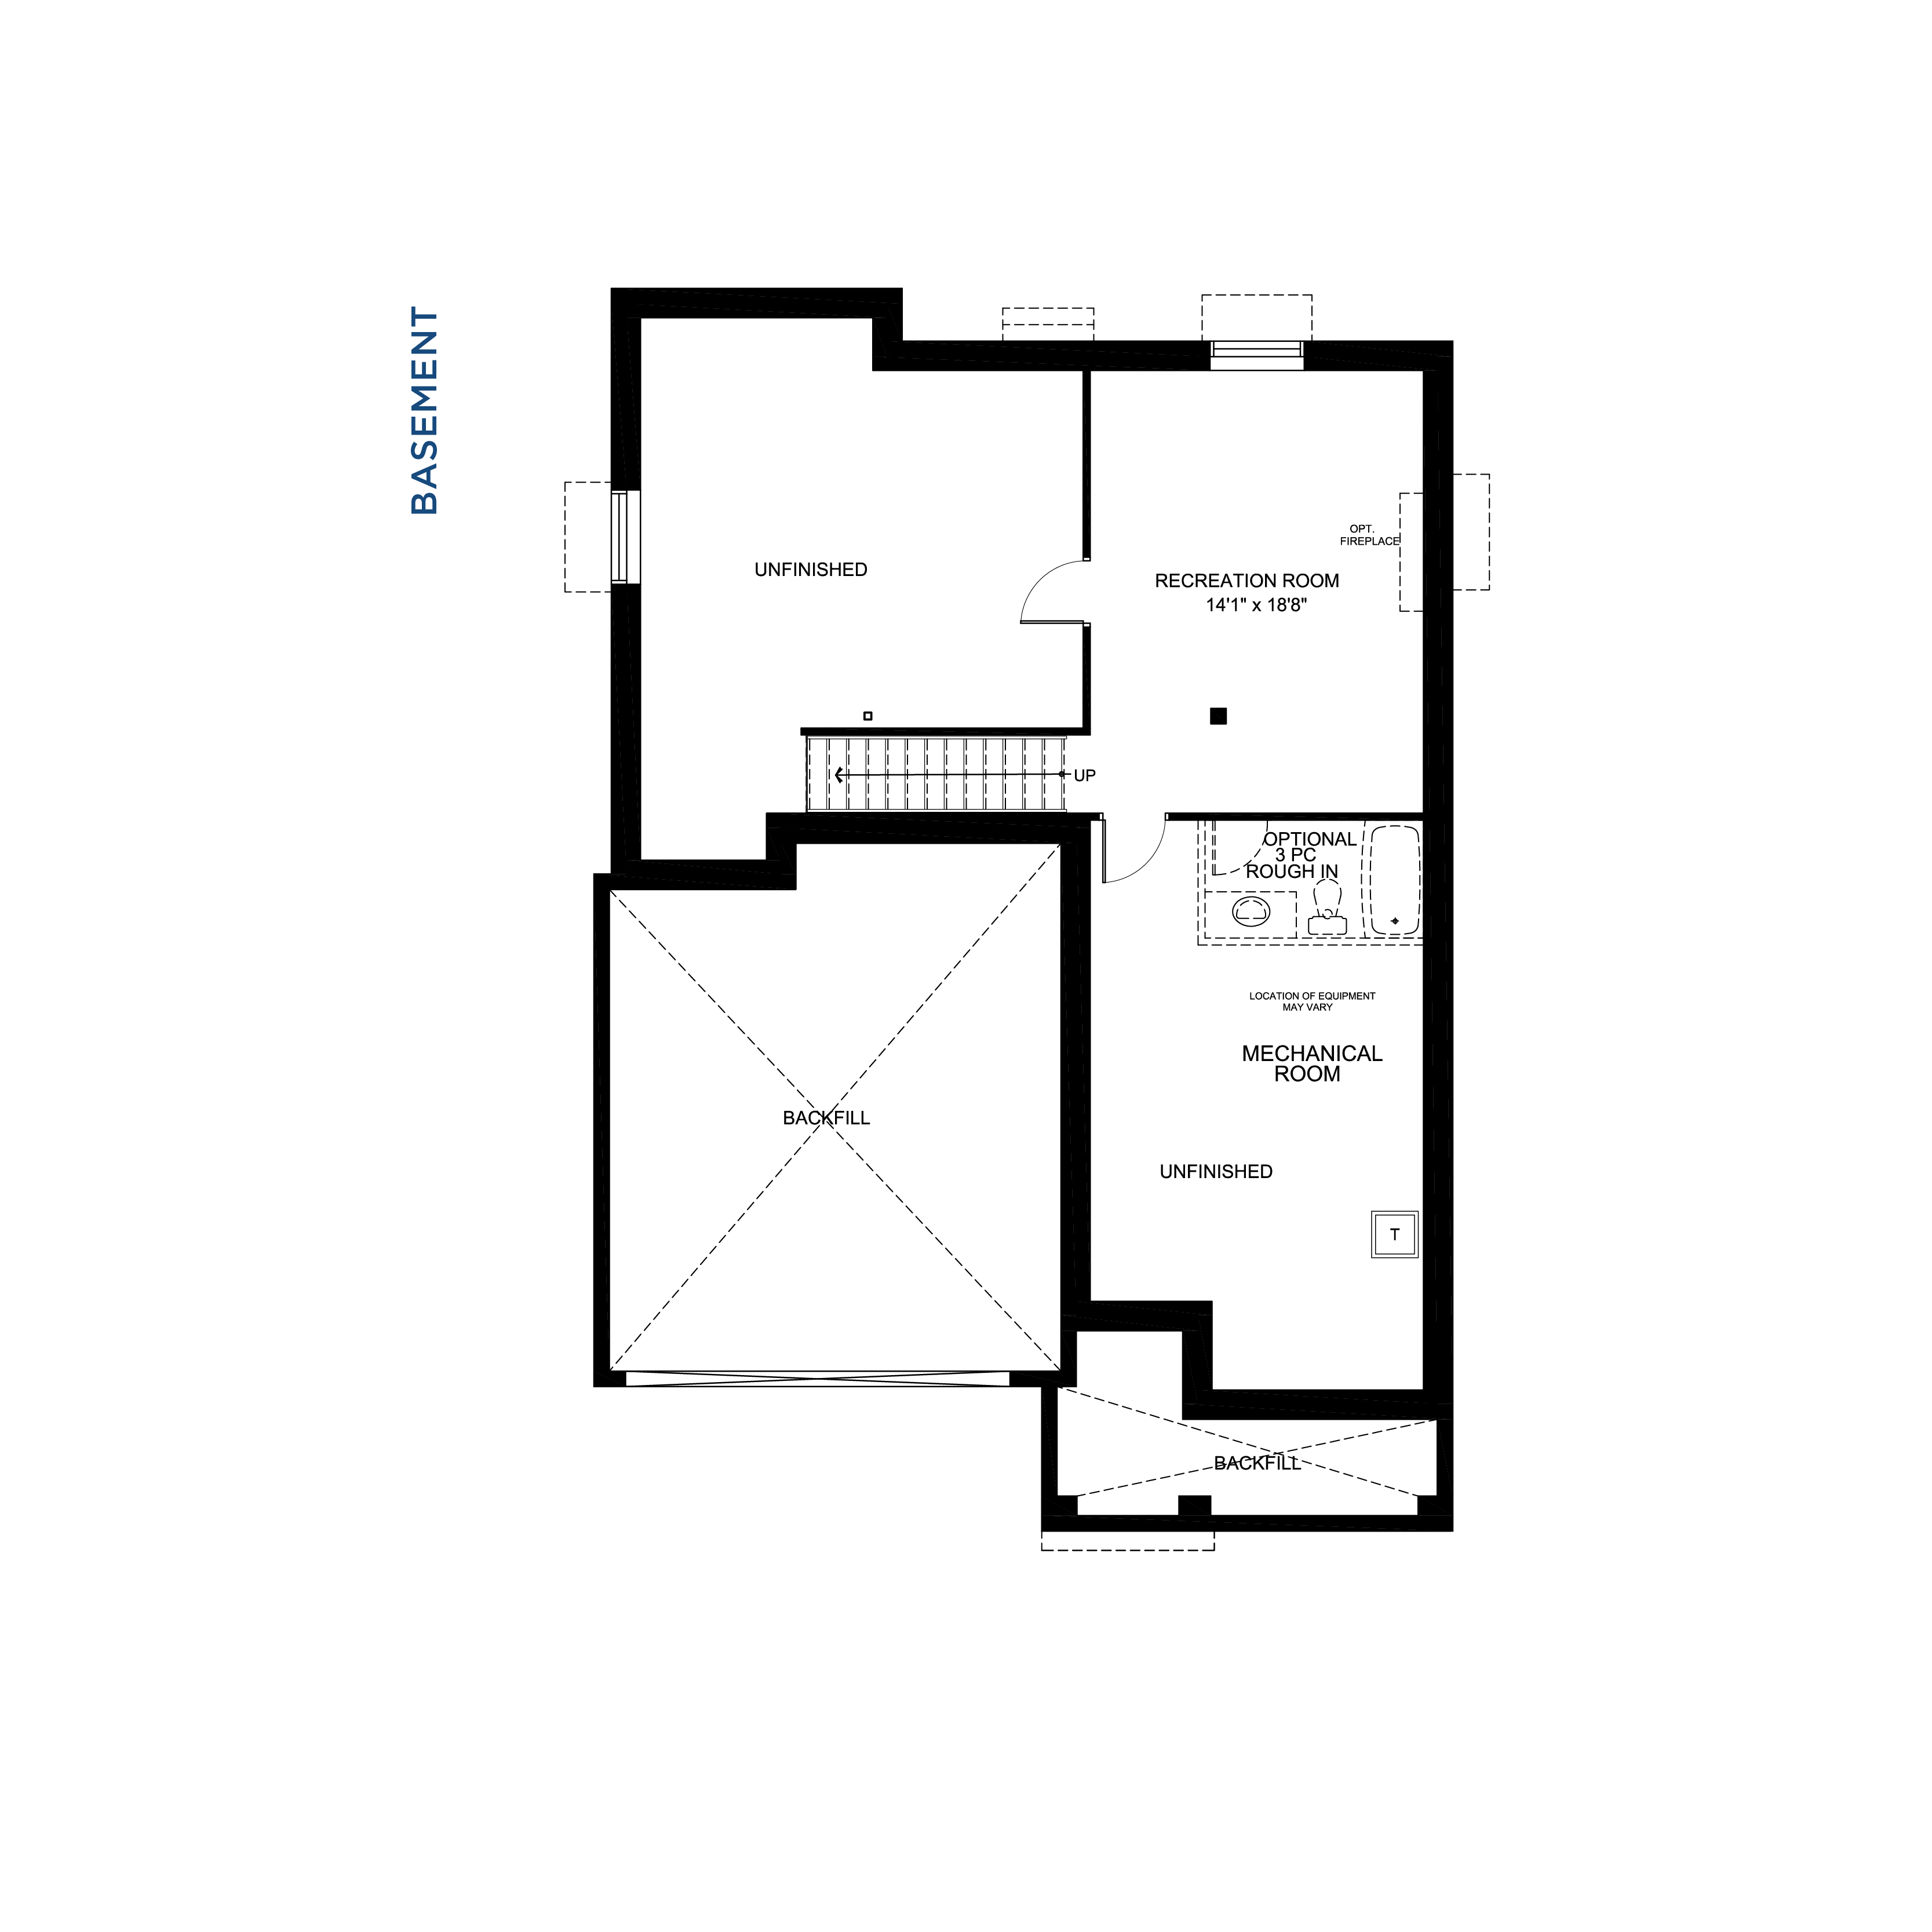 Floorplan Basement Level - Welland